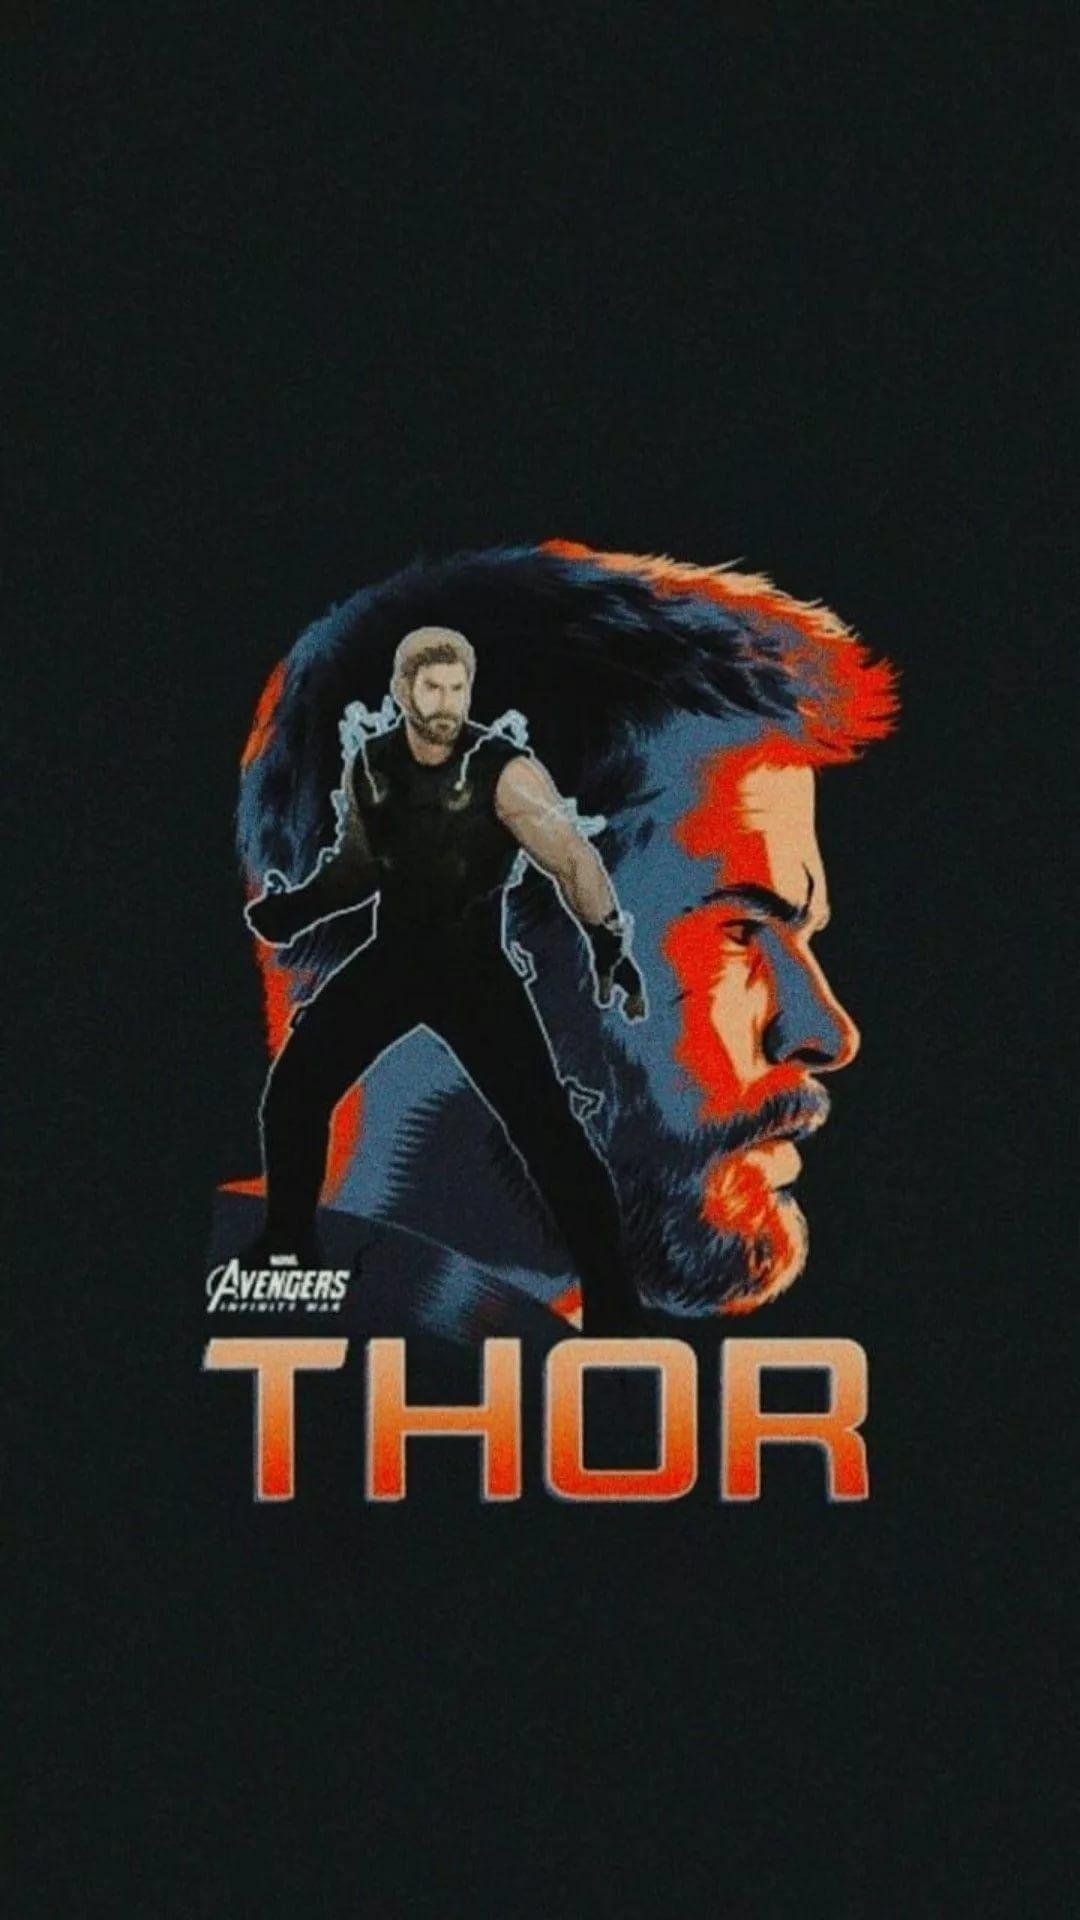 Thor illustration art Wallpaper Download - Thor